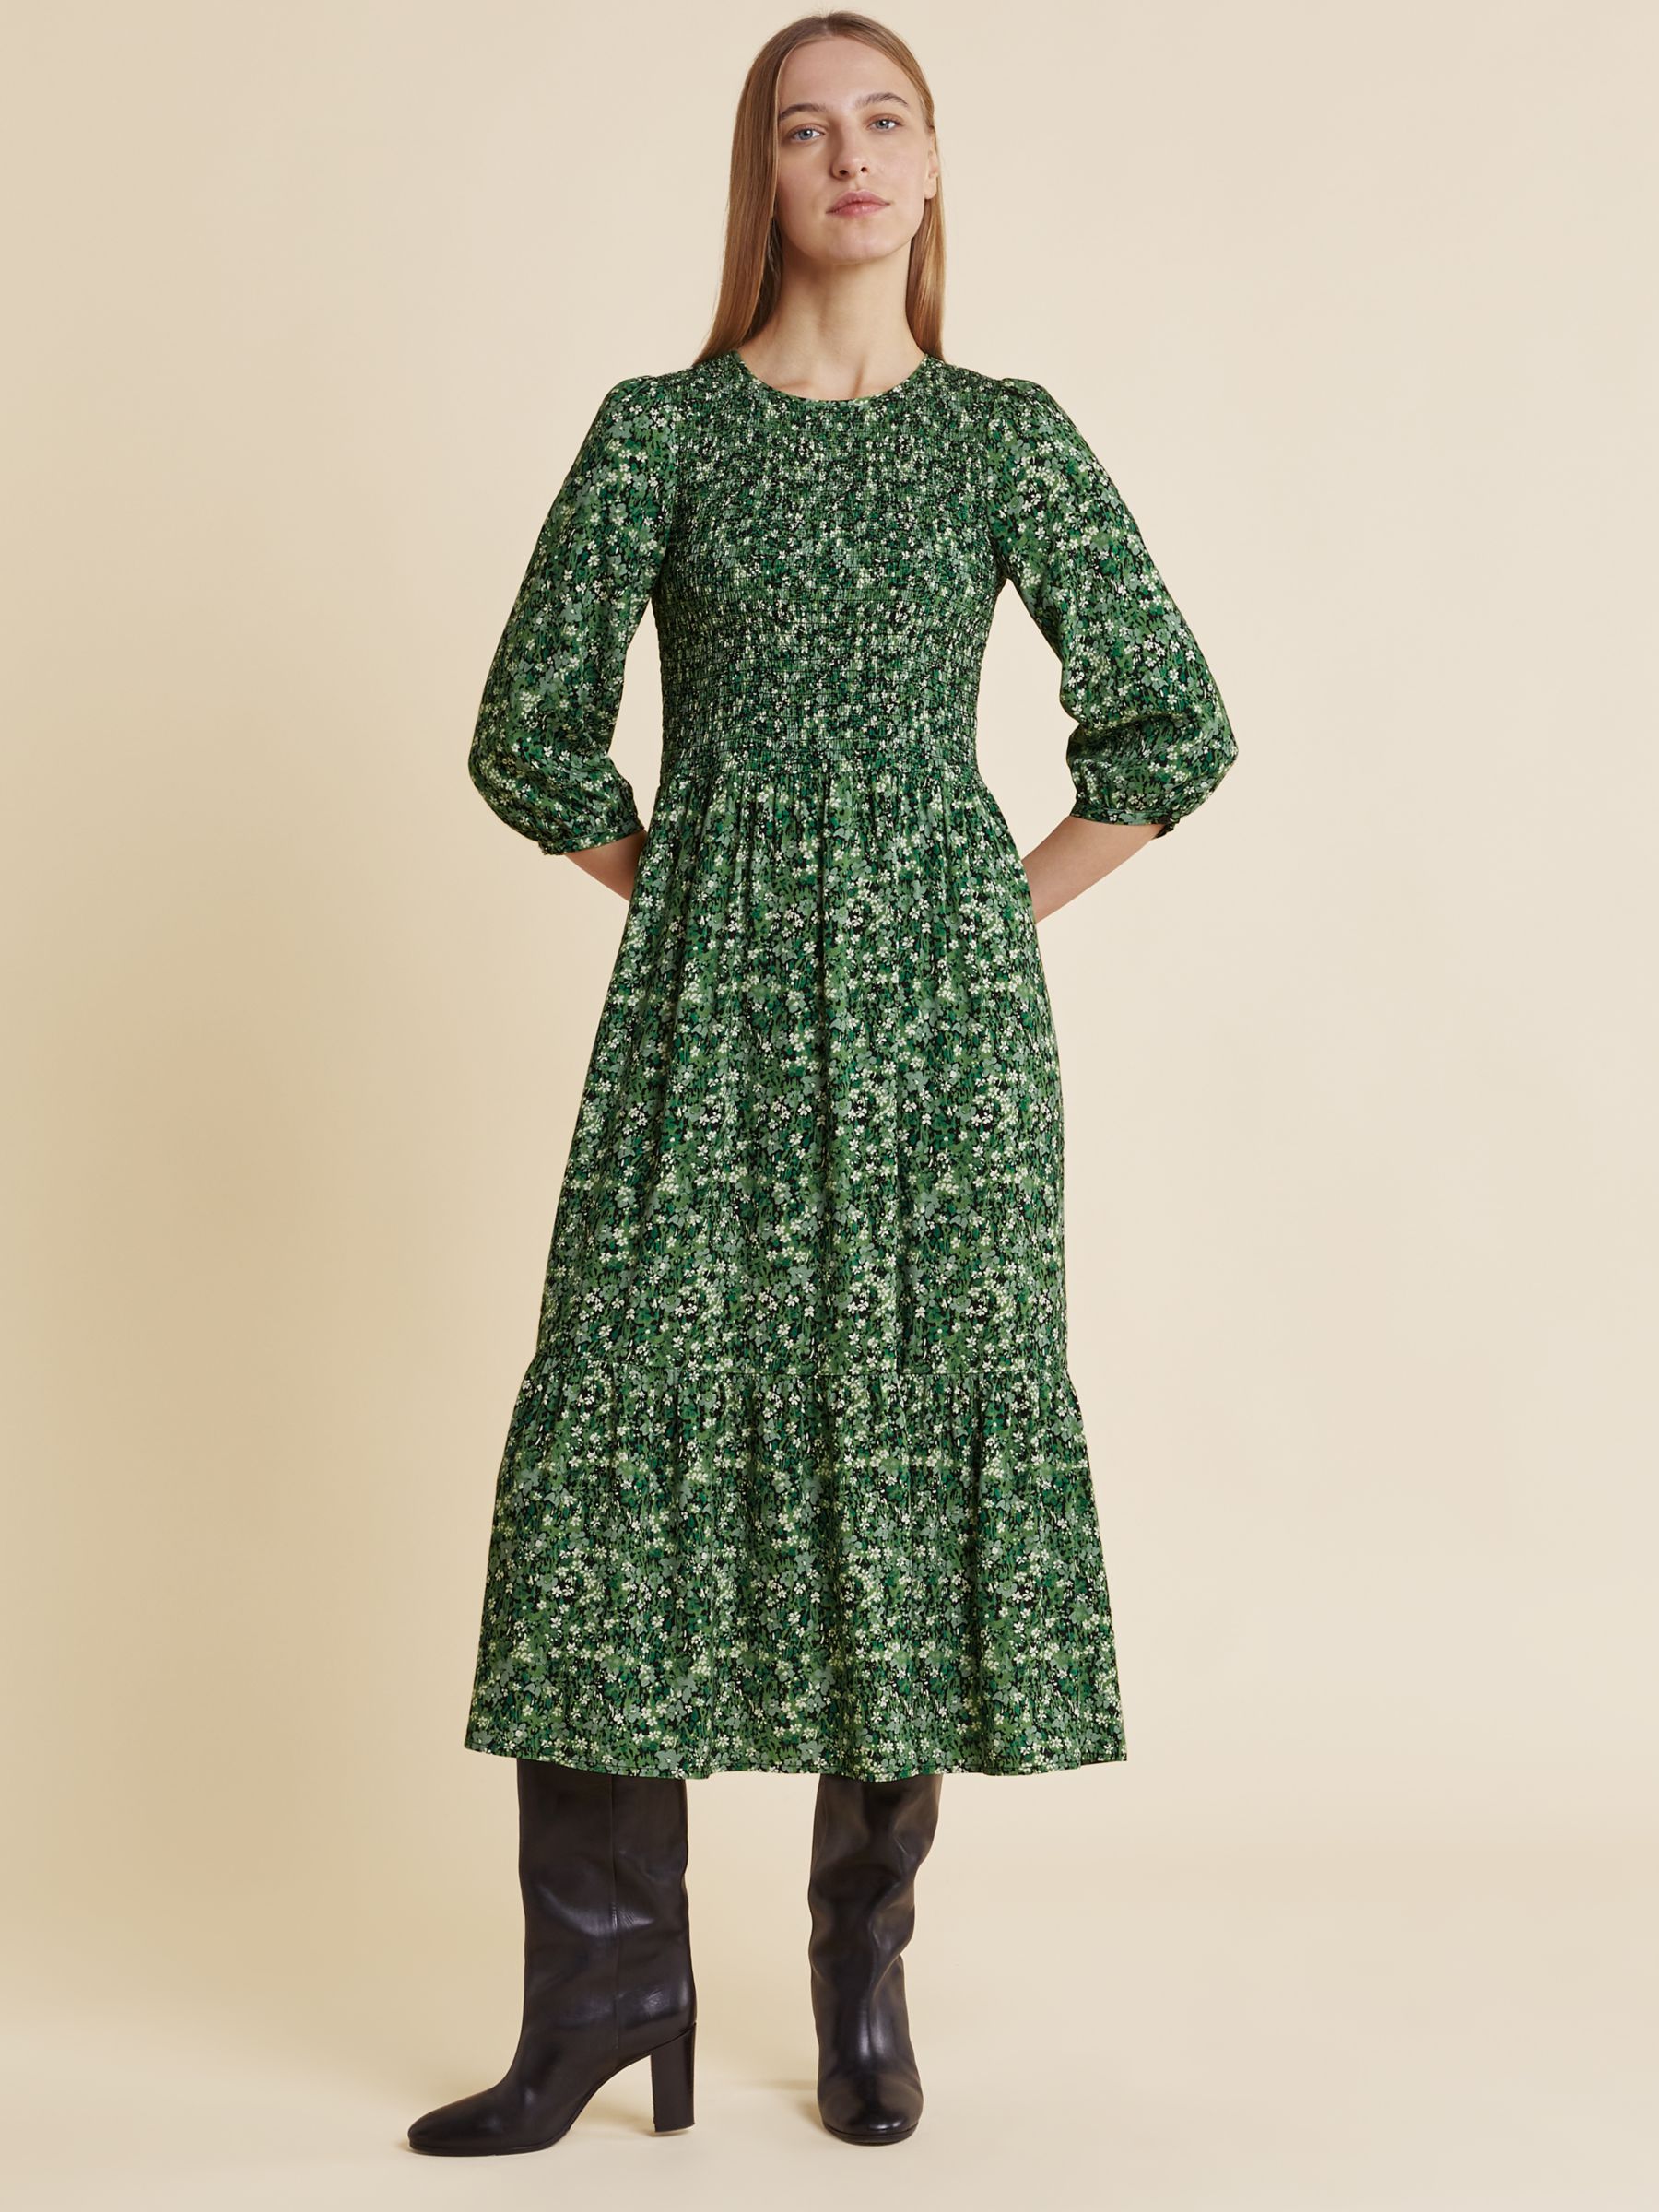 Shirred Bodice Dresses | John Lewis & Partners